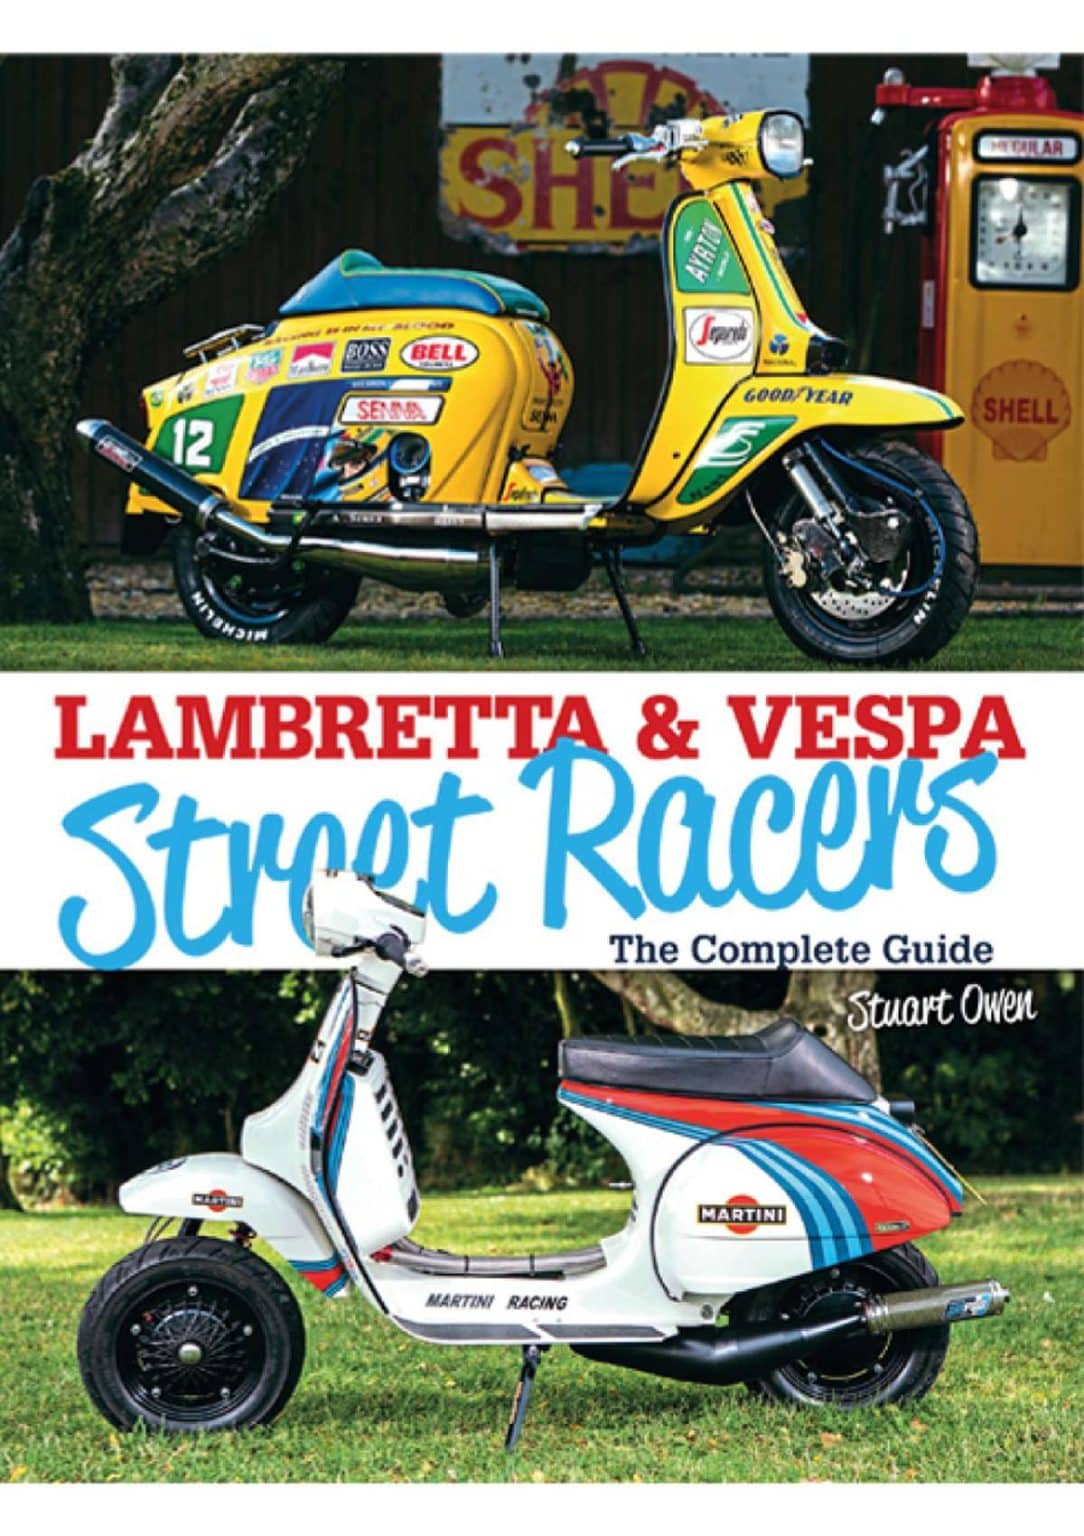 Lambretta & Vespa Street Racers The Complete Guide - Frenky ...